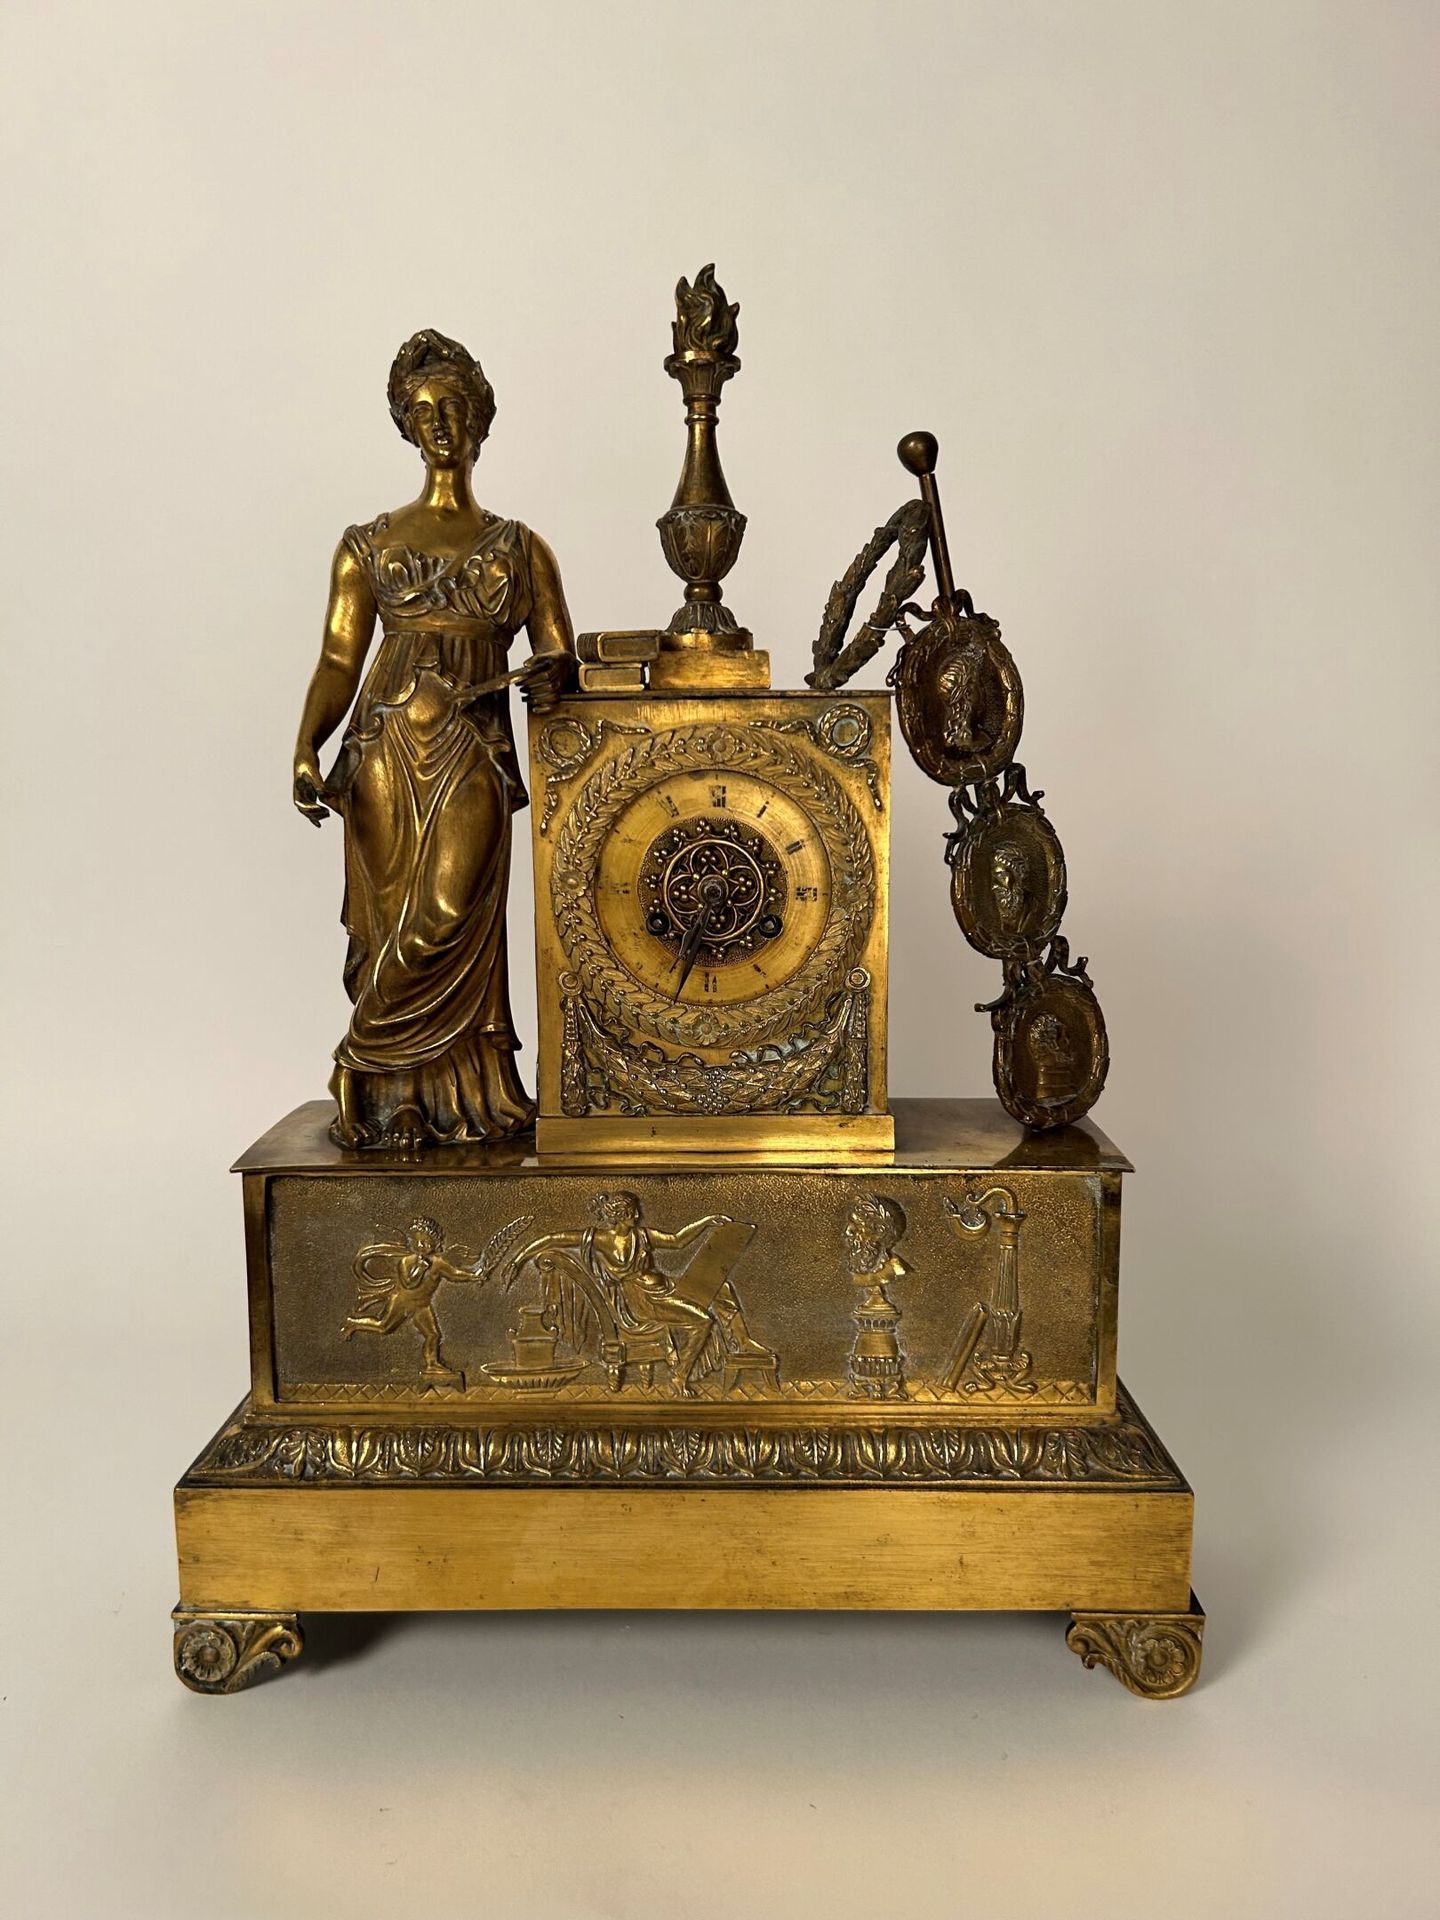 TRAVAIL XIX siècle 19 世纪作品
镀金青铜錾花钟，带有新古典主义装饰，描绘了一位古代风格的女性，寓意艺术。3枚徽章分别代表古式轮廓和皇冠。带&hellip;